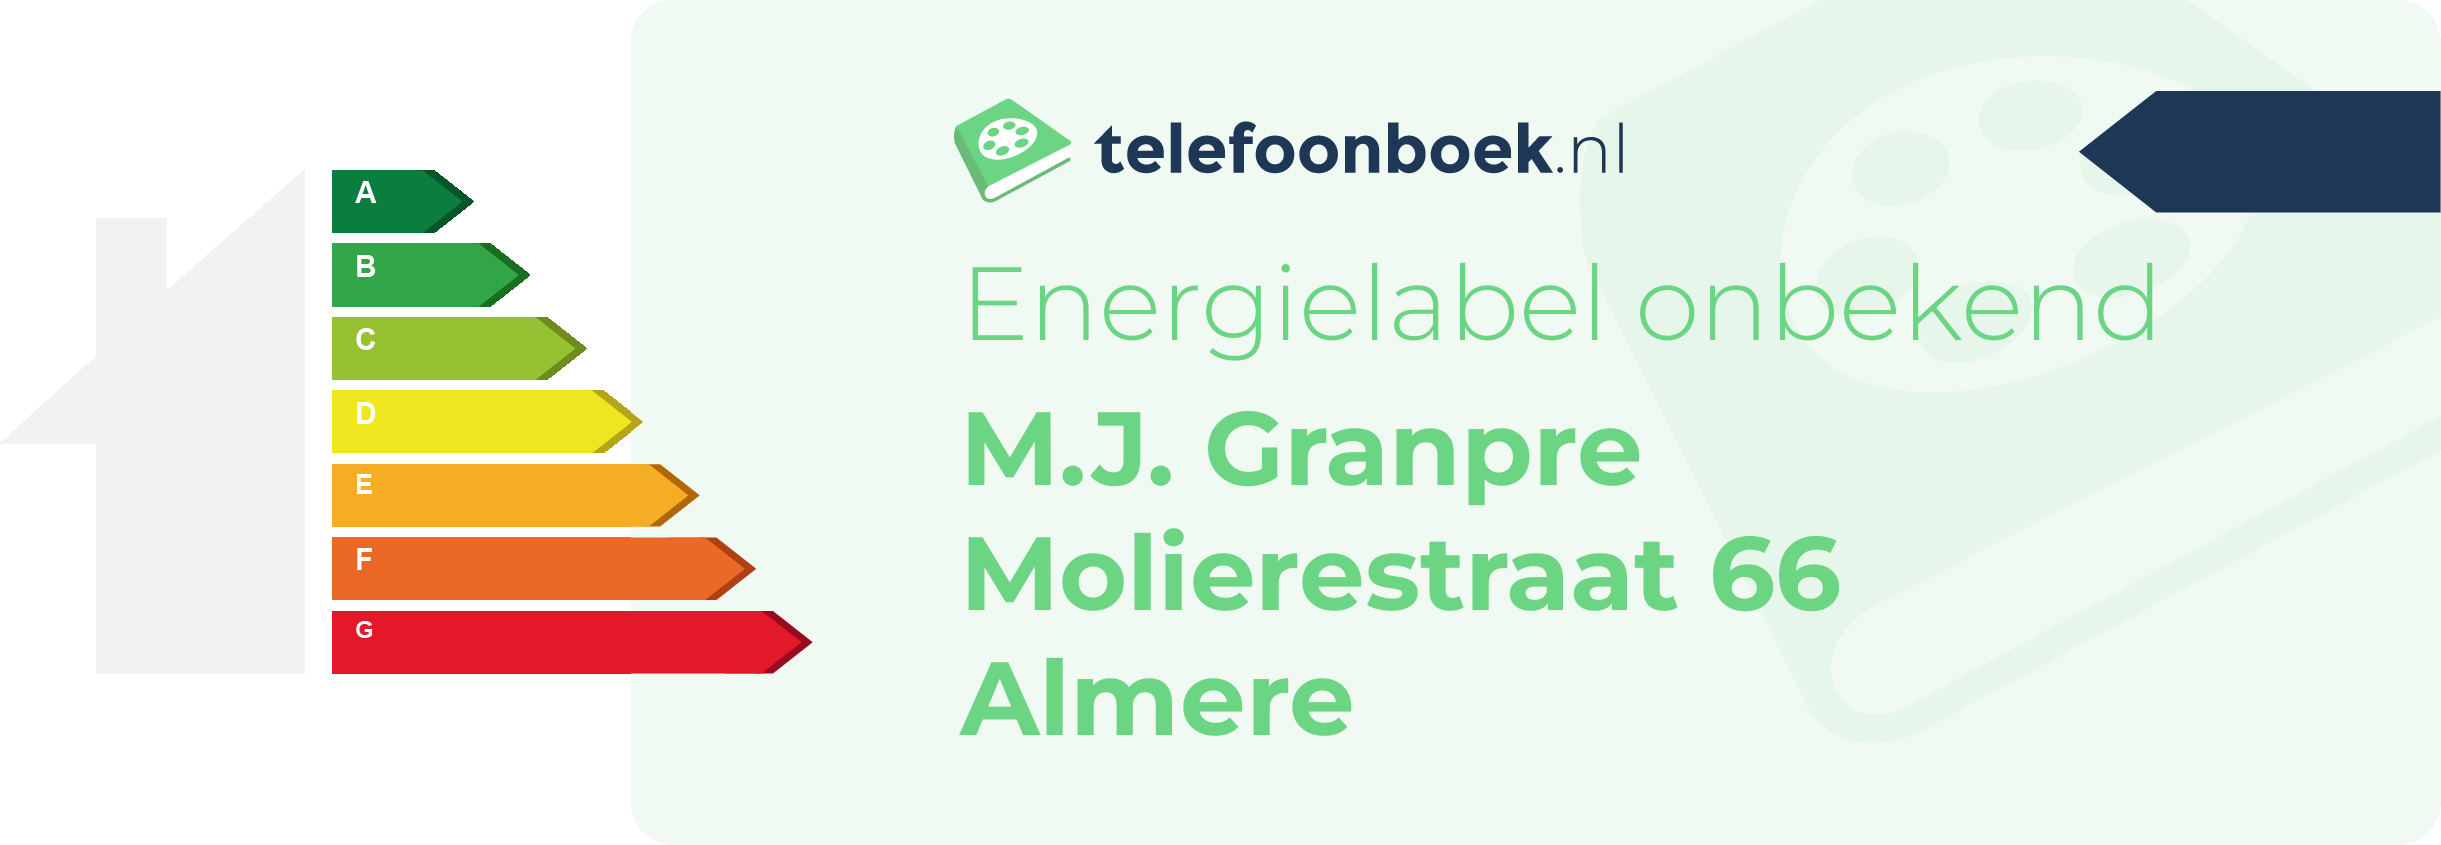 Energielabel M.J. Granpre Molierestraat 66 Almere